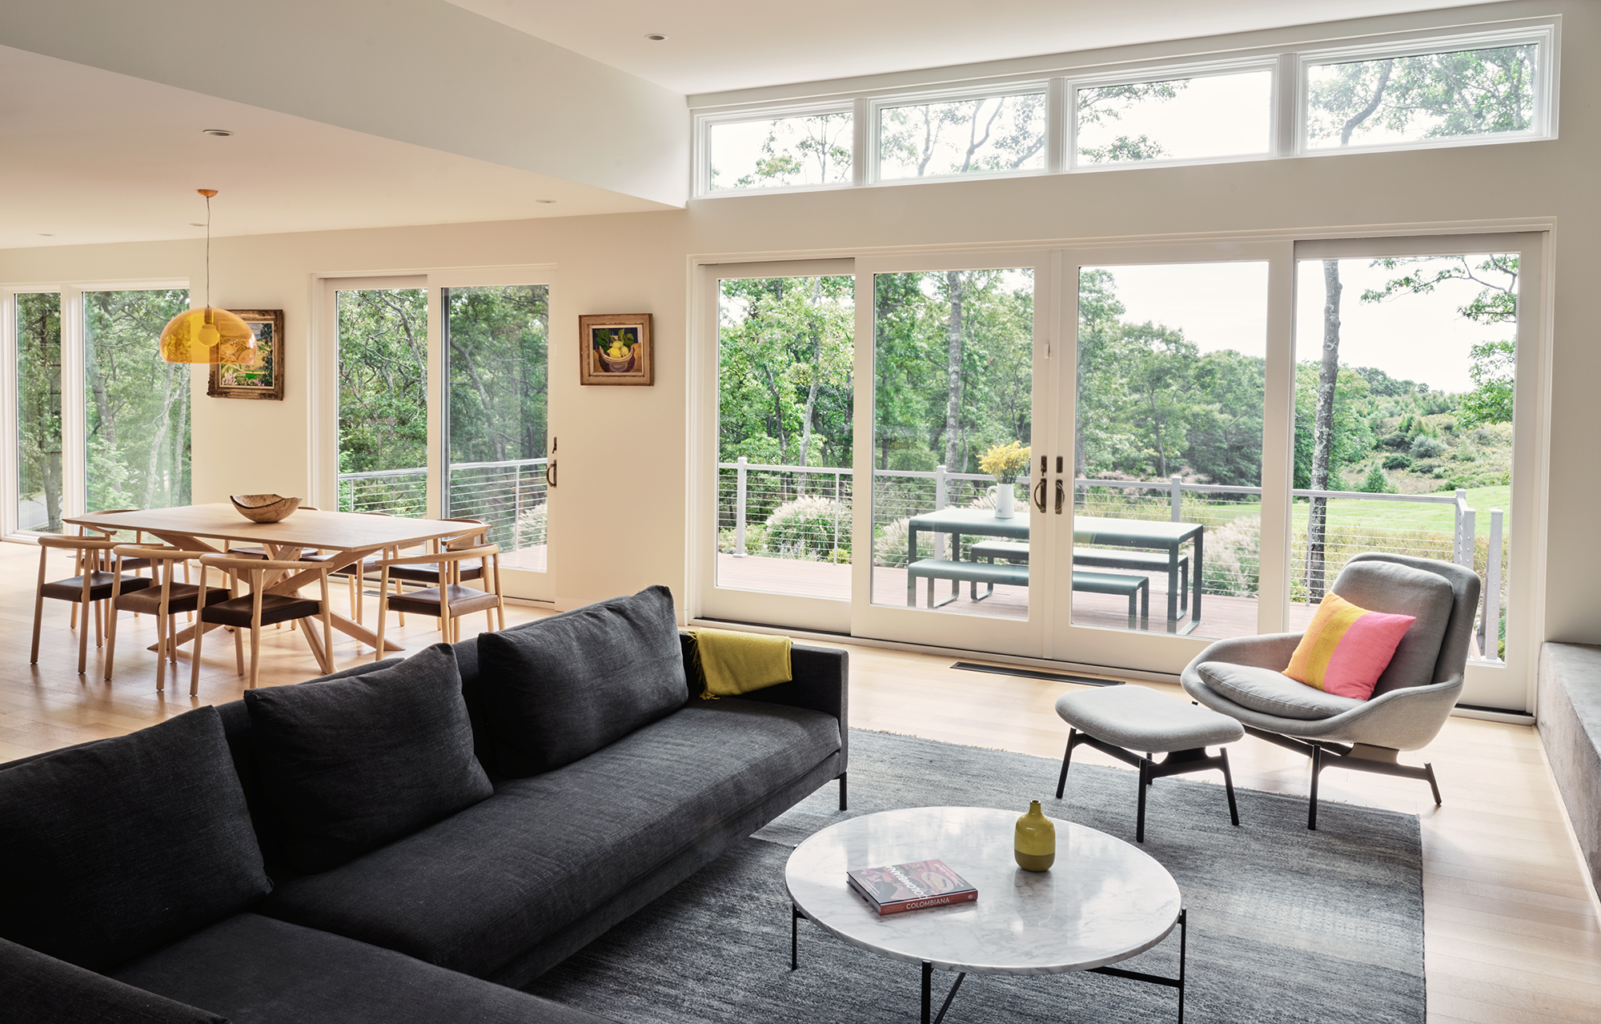 view of living room Ocean View House, Charlestown Rhode Island, Sarah Jefferys Architecture + Design